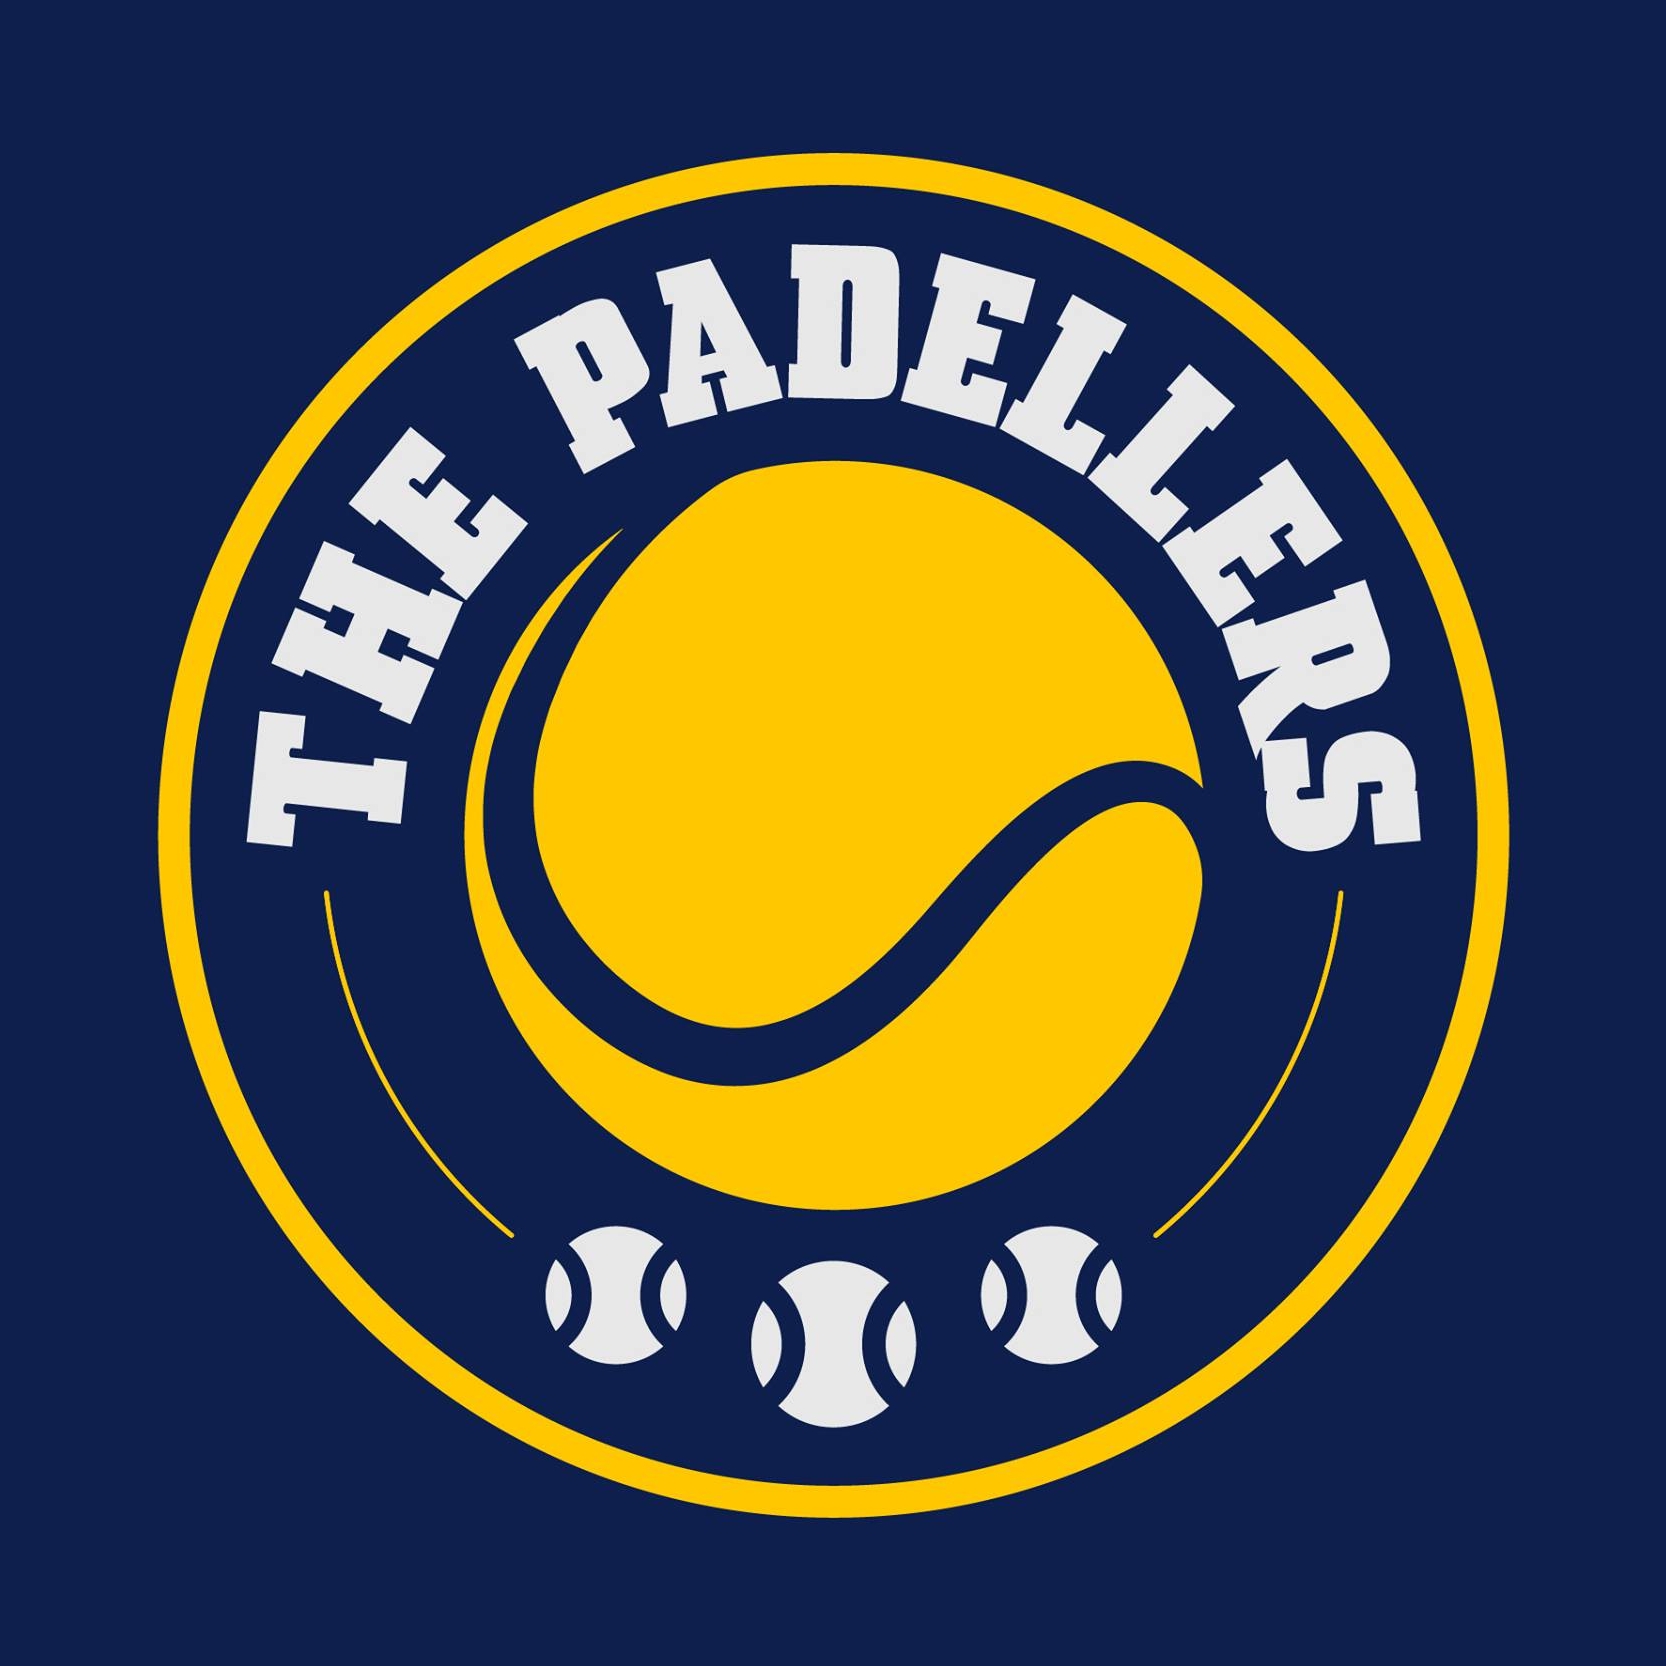 Profile image of venue The Padellers - Hoorn